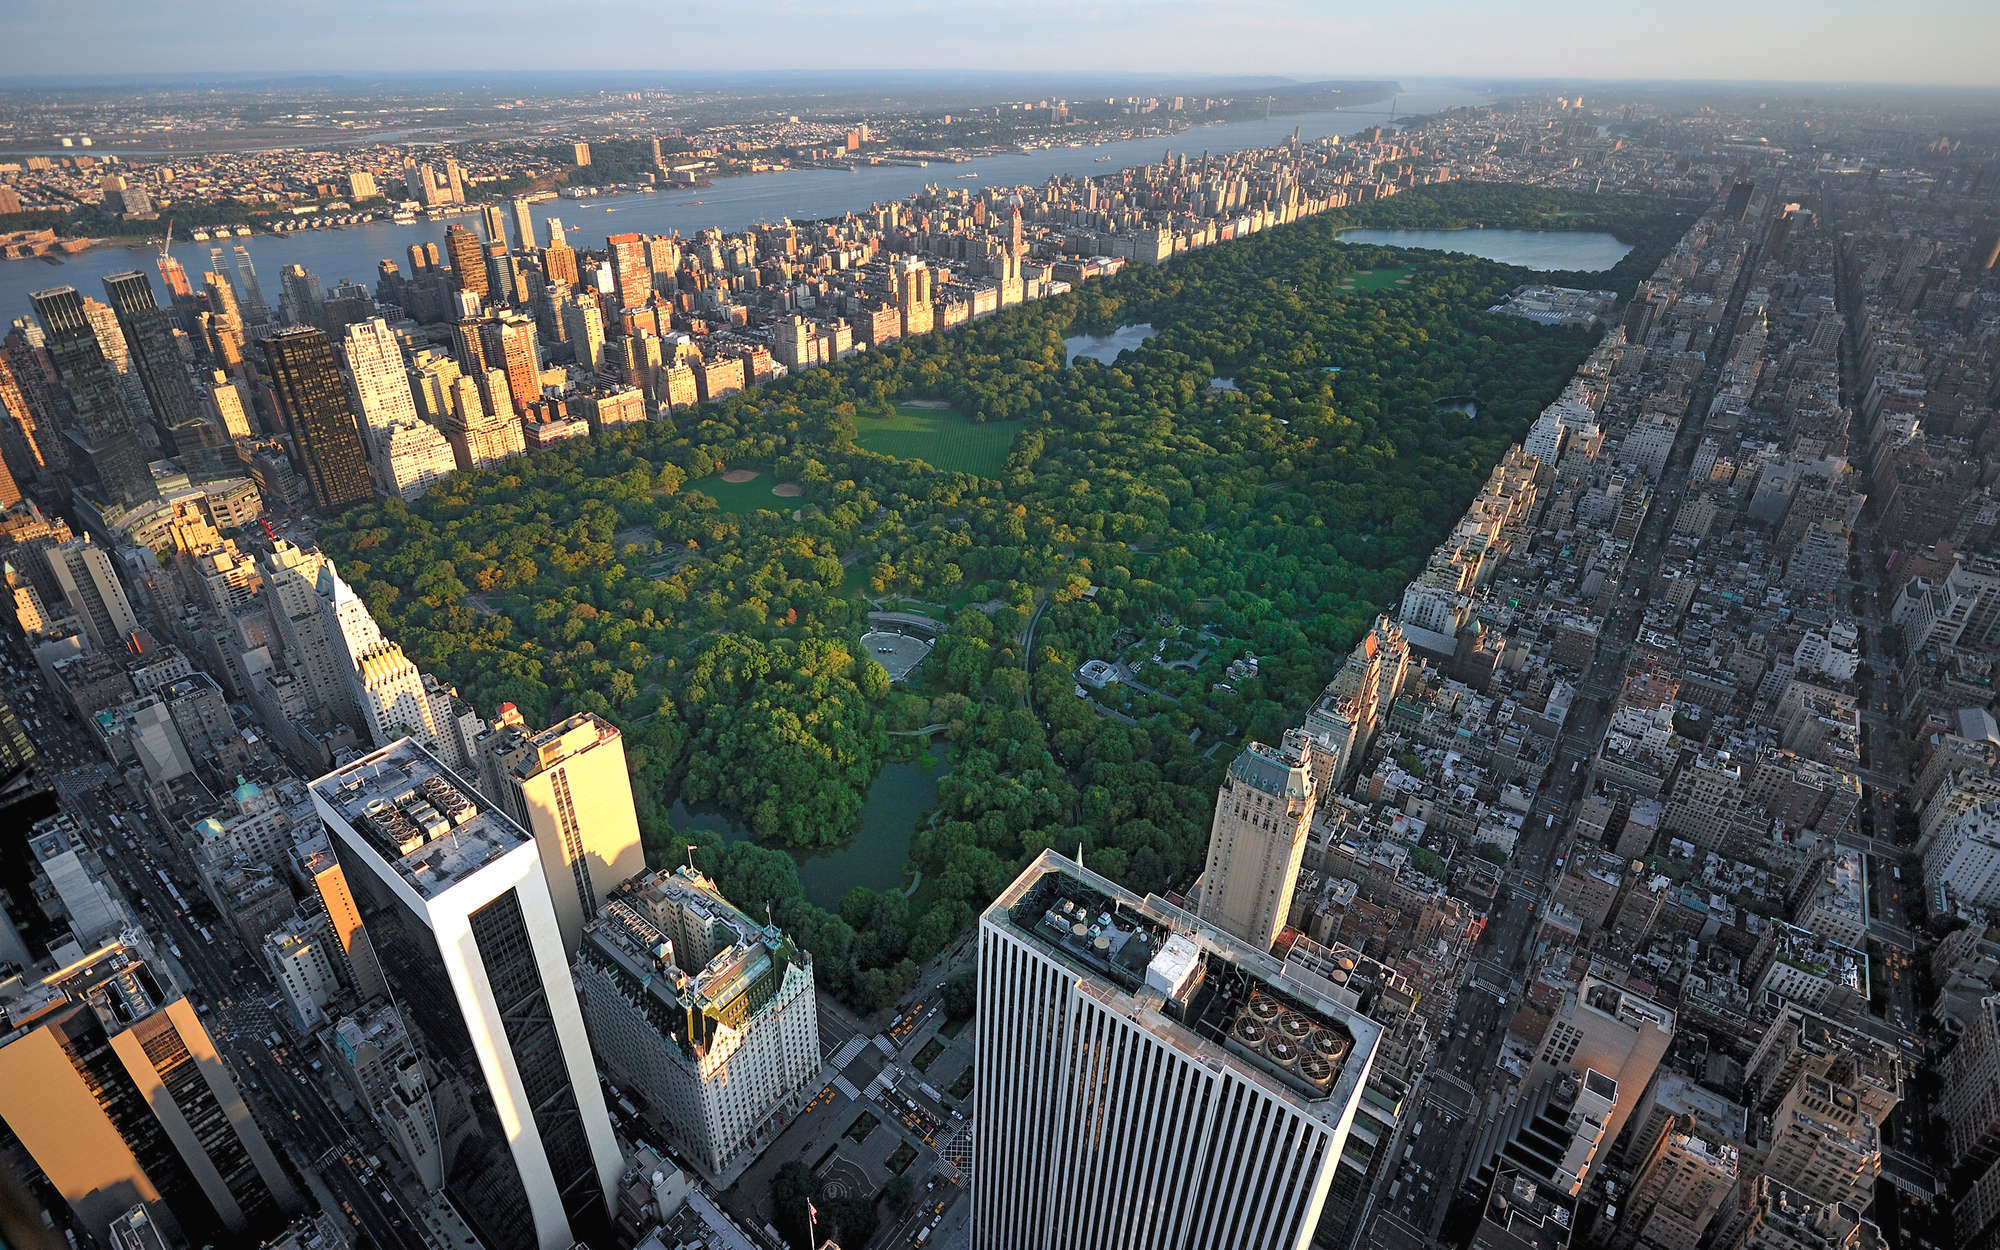             Fotomurali New York Central Park dall'alto - Pile liscio opaco
        